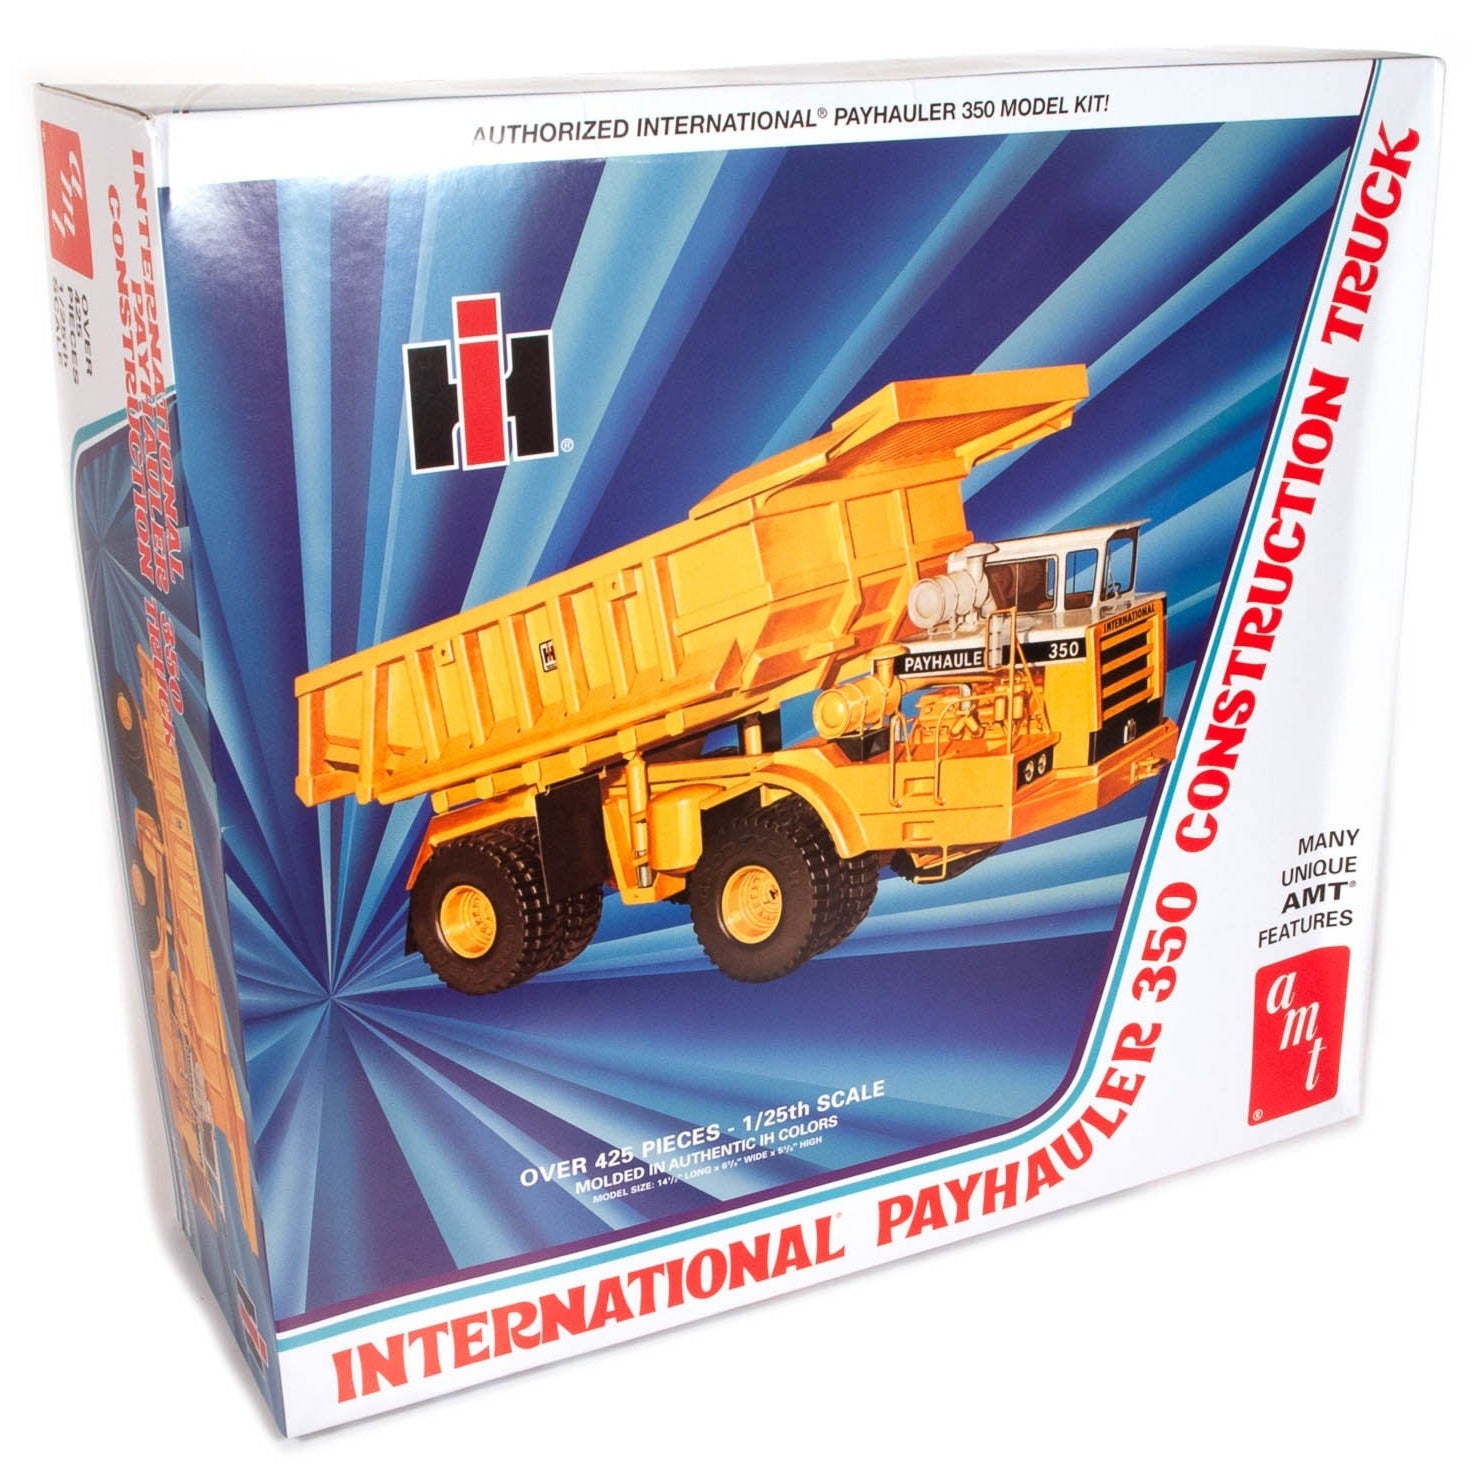 AMT International Payhauler 350 1:25 Scale Model Kit